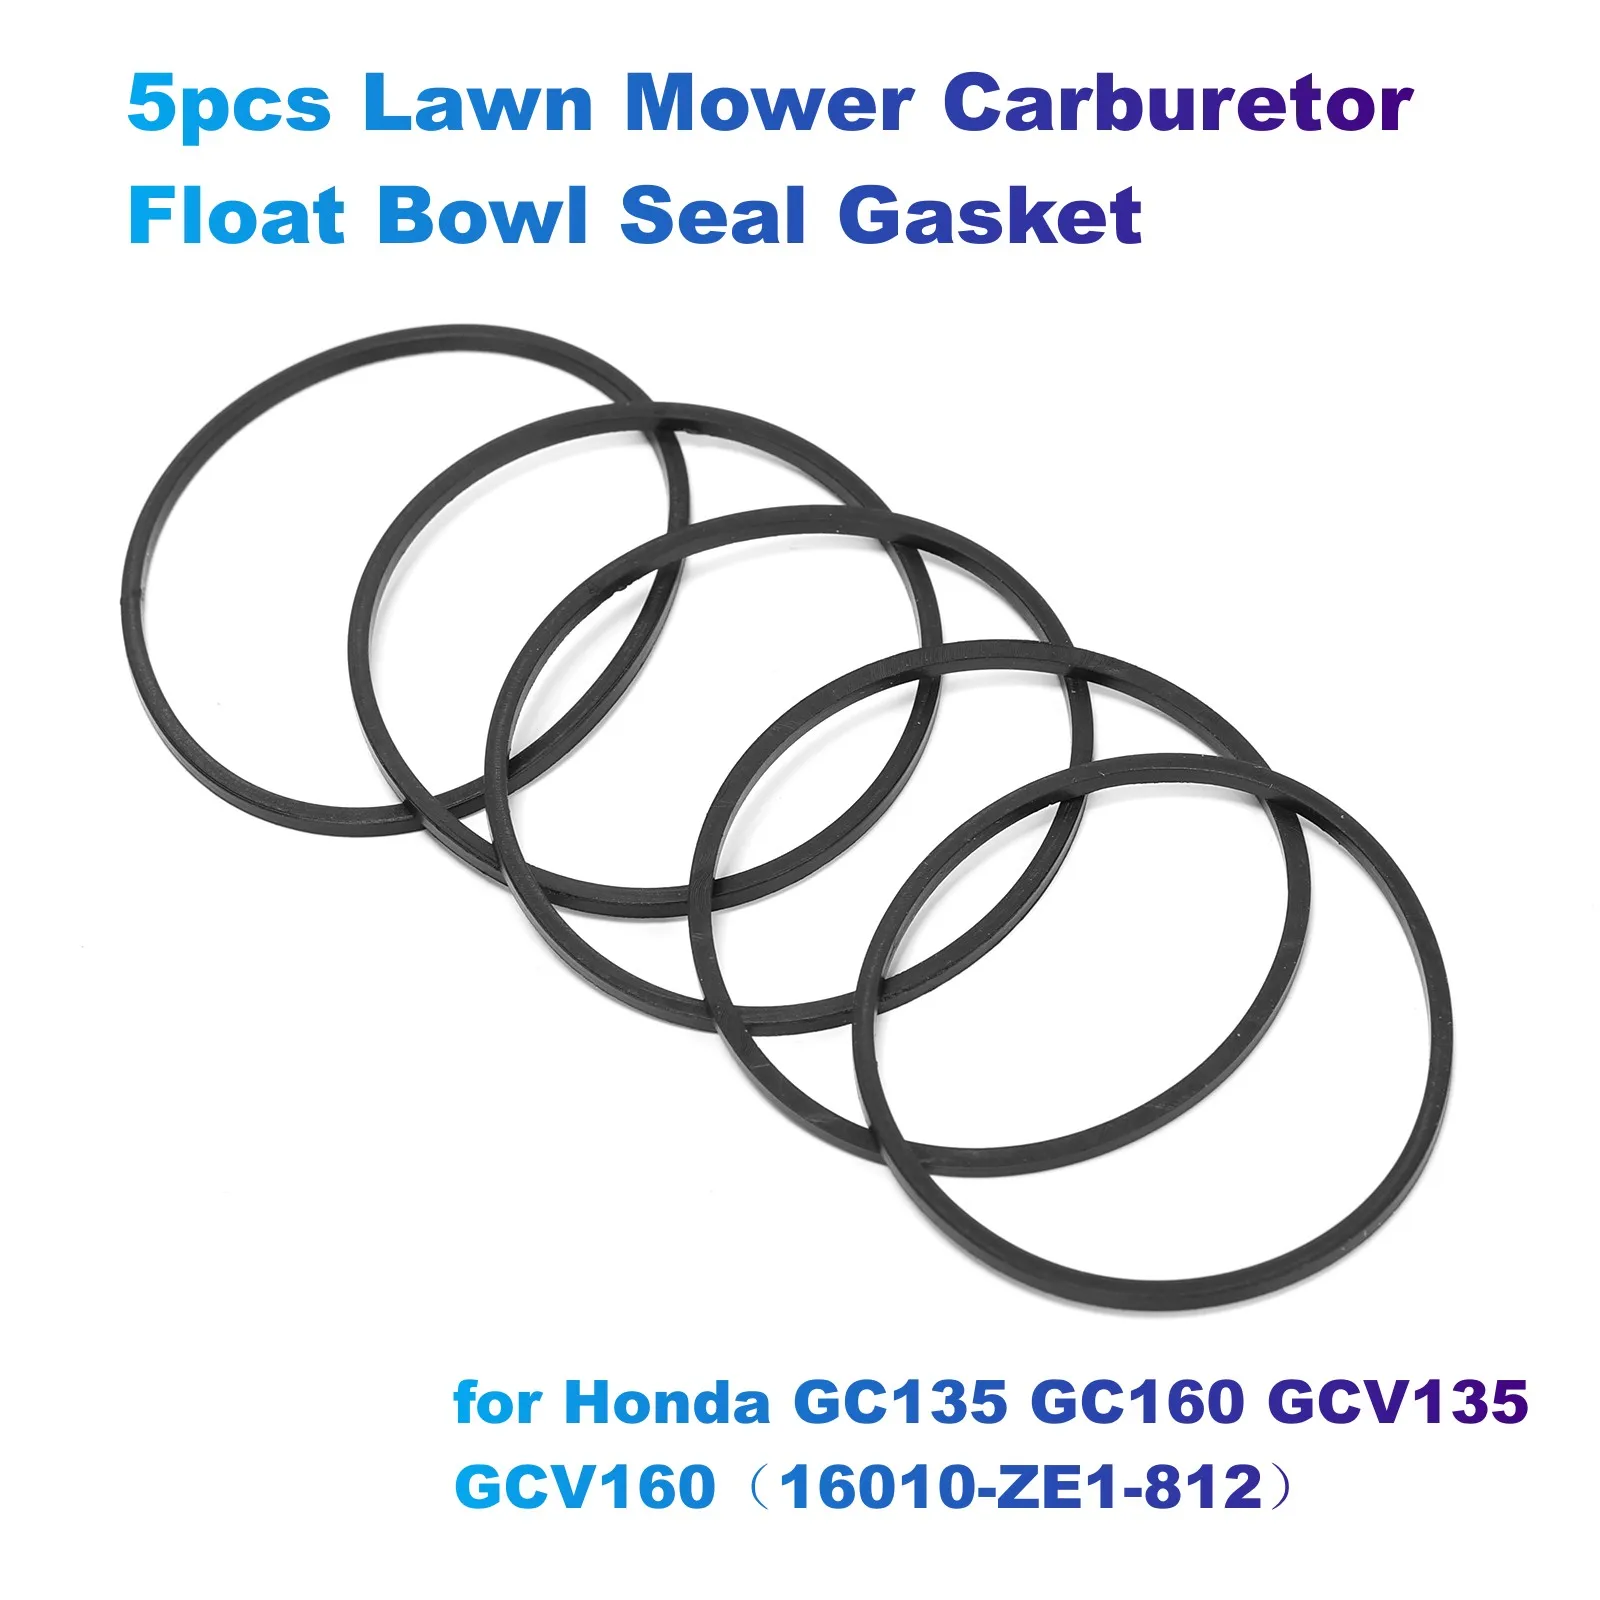 5pcs Lawn Mower Carburetor Float Bowl Seal Gasket for Honda GC135 GC160 GCV135 GCV160（16010-ZE1-812） clutch bolt washer kit fit for honda gx31 gx35 gx35nt fg100 hht31s hhe31c lawn mower trimmer clutch bolt washer kit